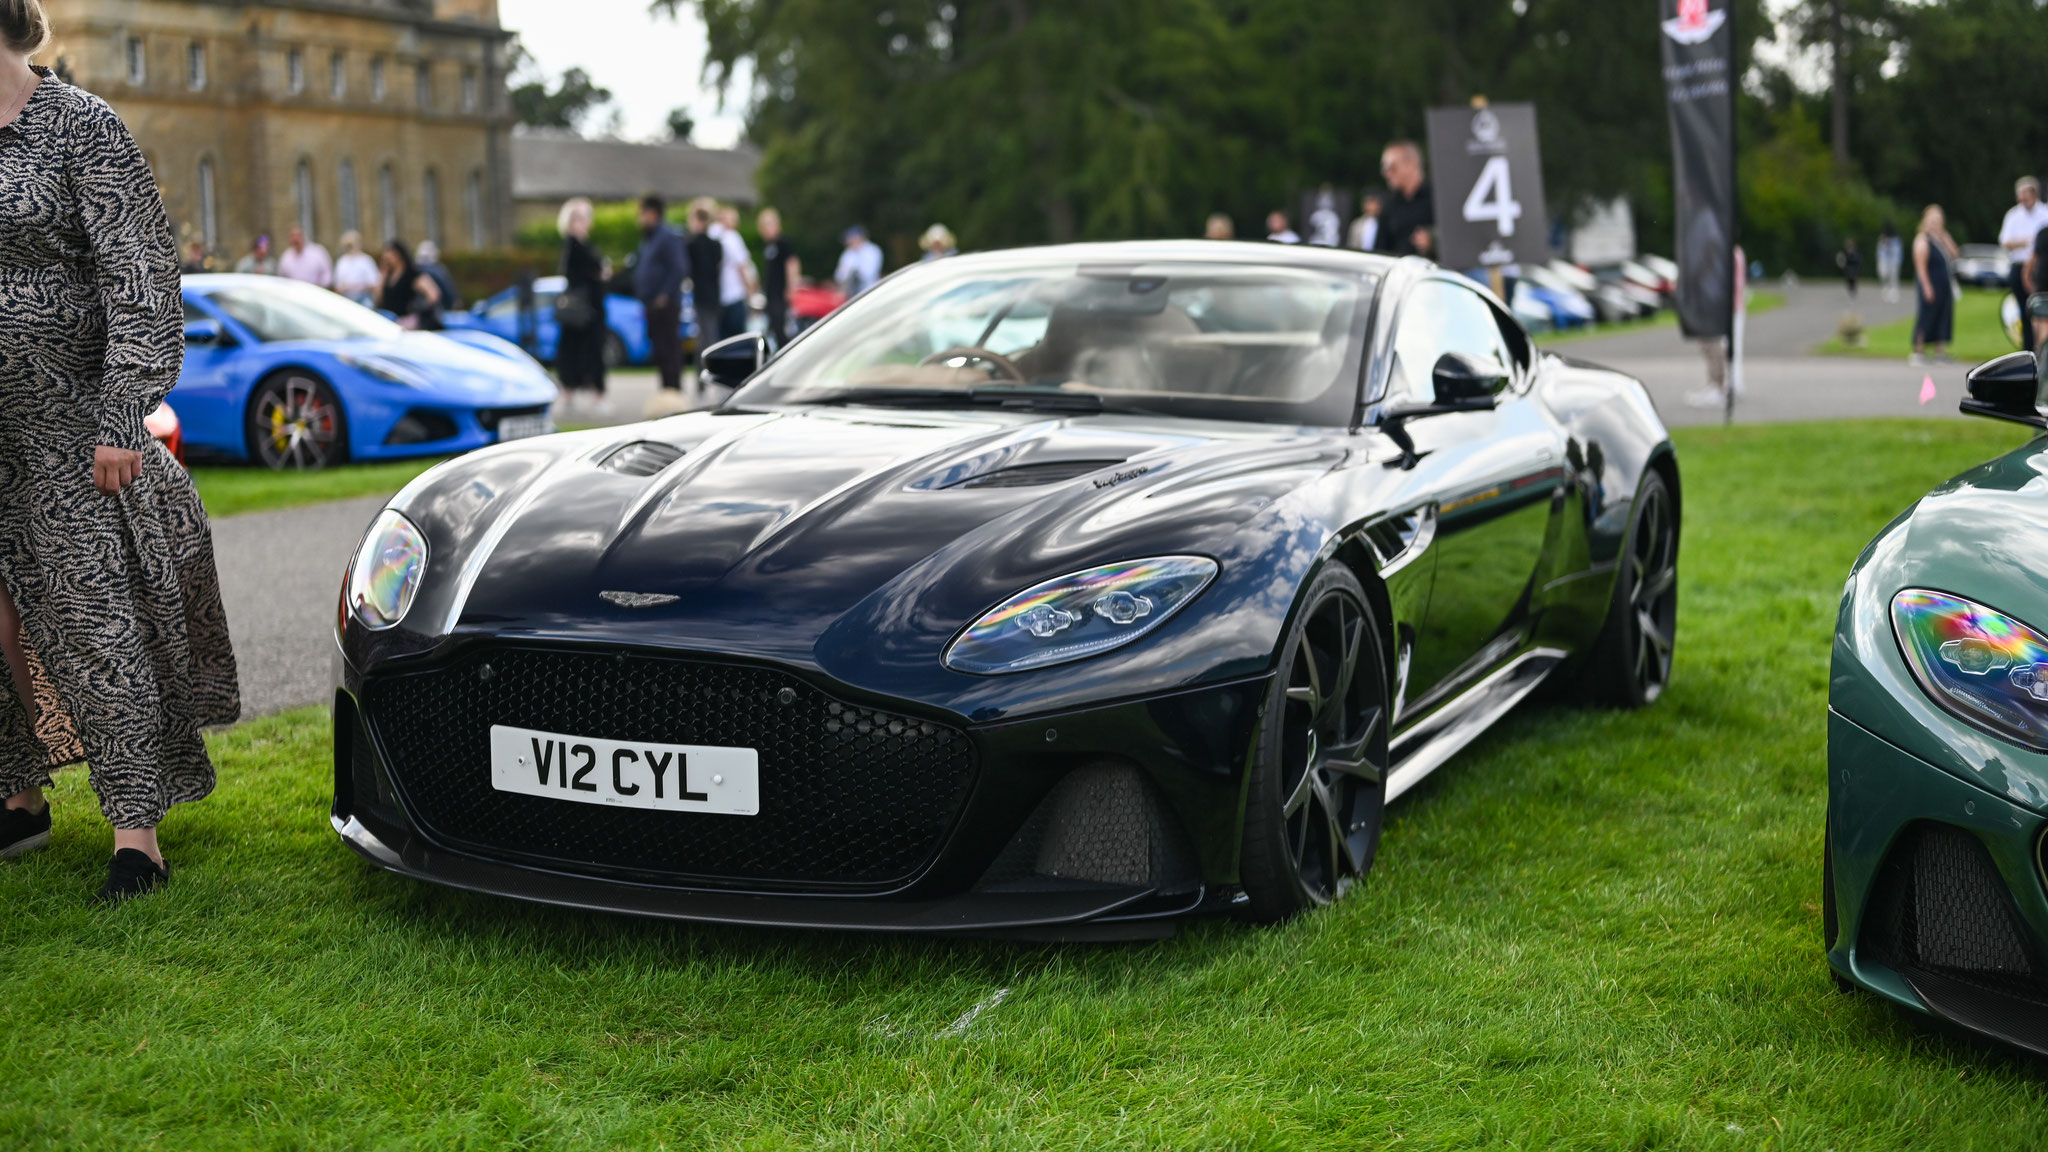 Aston Martin DBS Superleggera - V12CYL (GB)